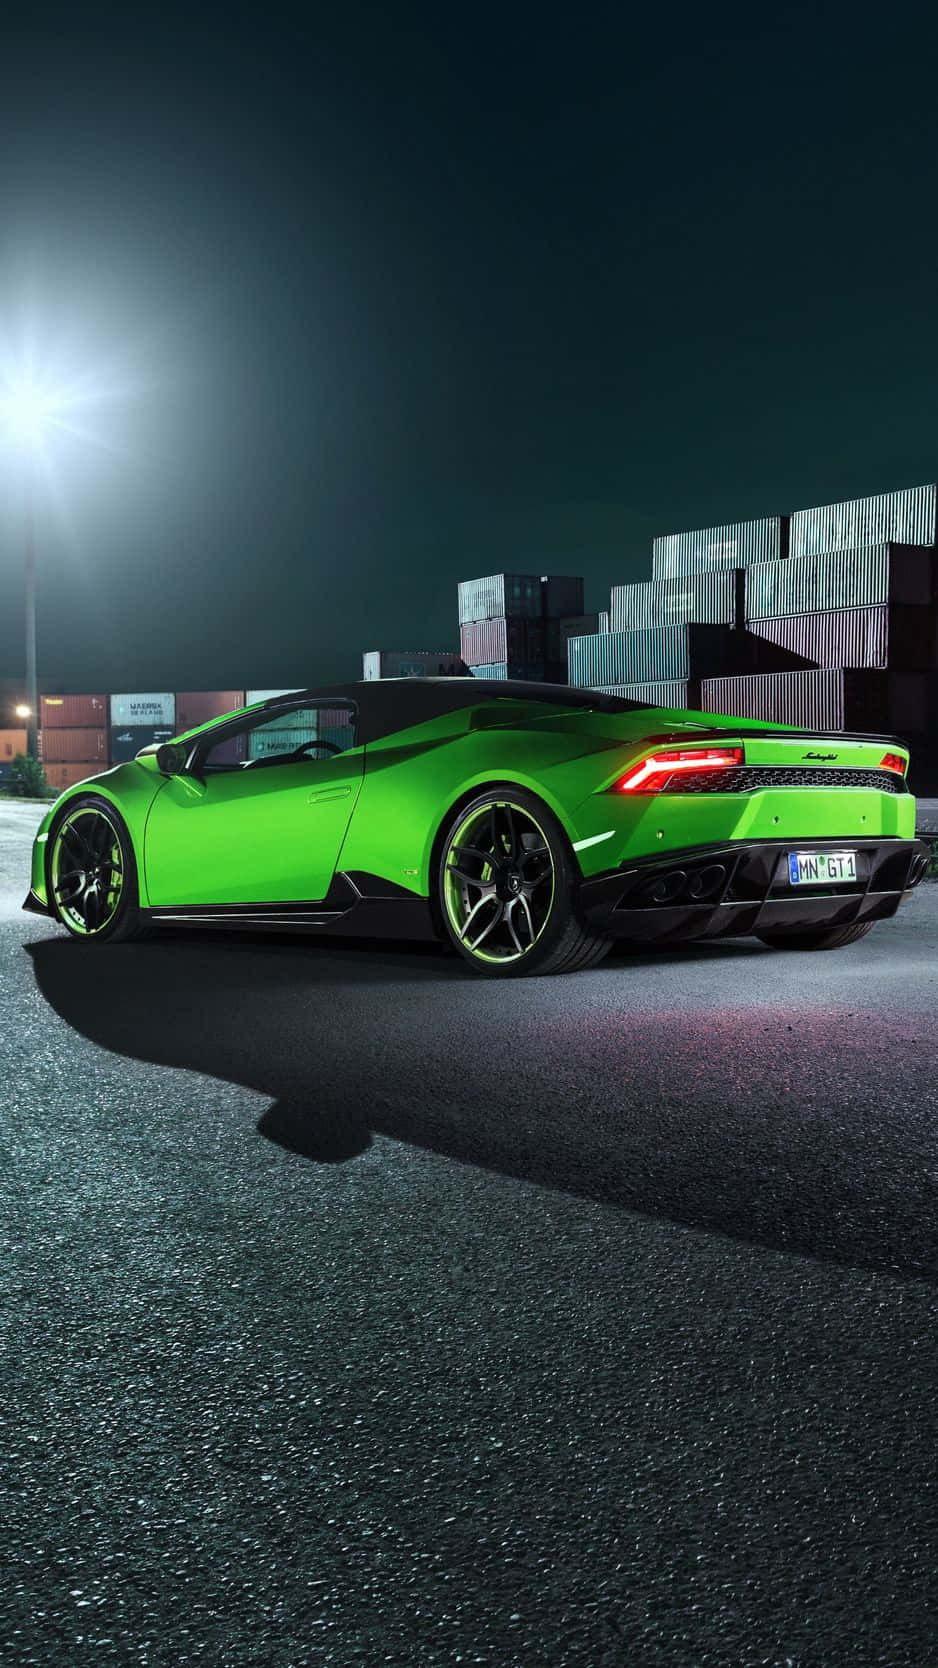 Fantastisktgrönt Lamborghini-iphone-tema. Wallpaper